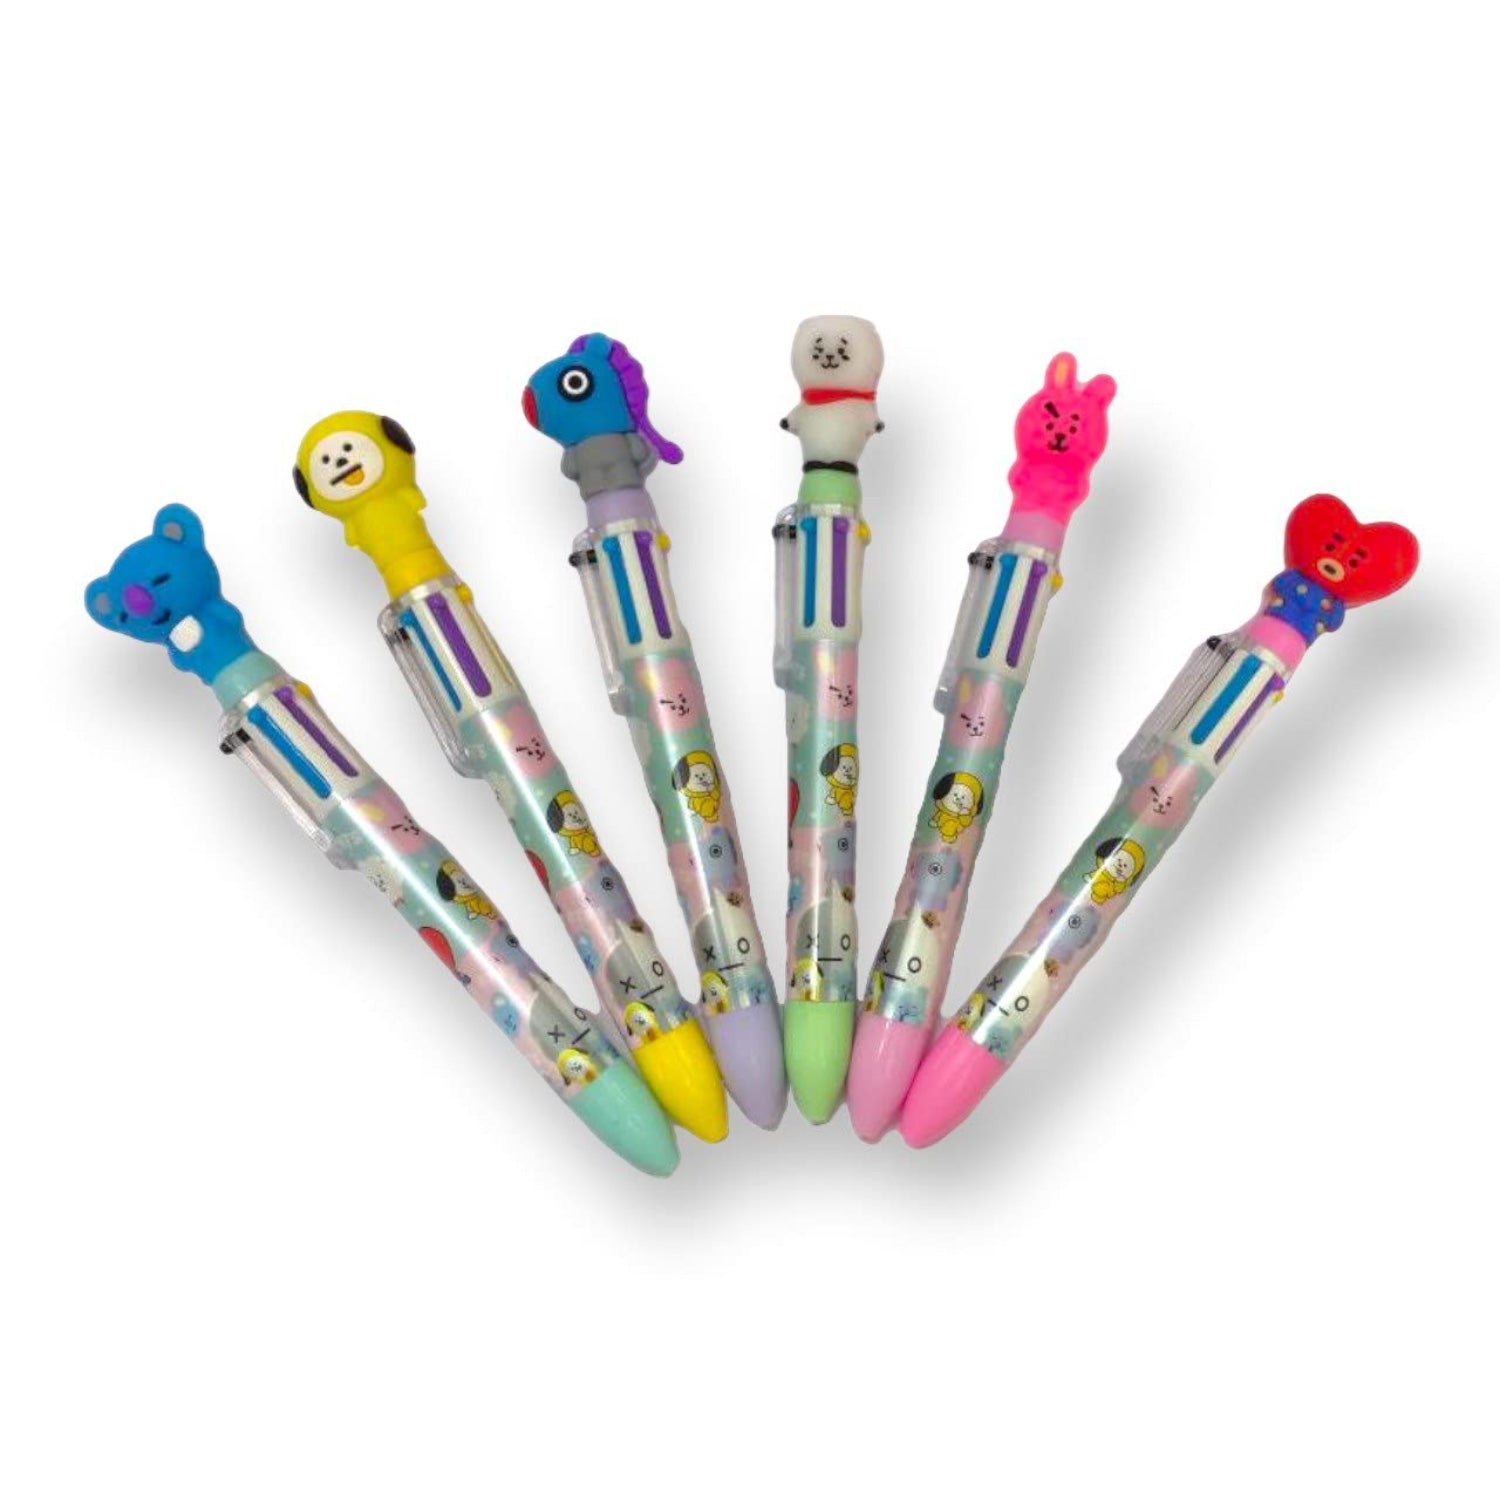 Multicolor 6-In-1 Ball Pen | Ballpoint Pen With LED Light Head - for Students, Kids, Girls, Boys, School, Drawing, Birthday Gift & Return Gifts - Apkamart